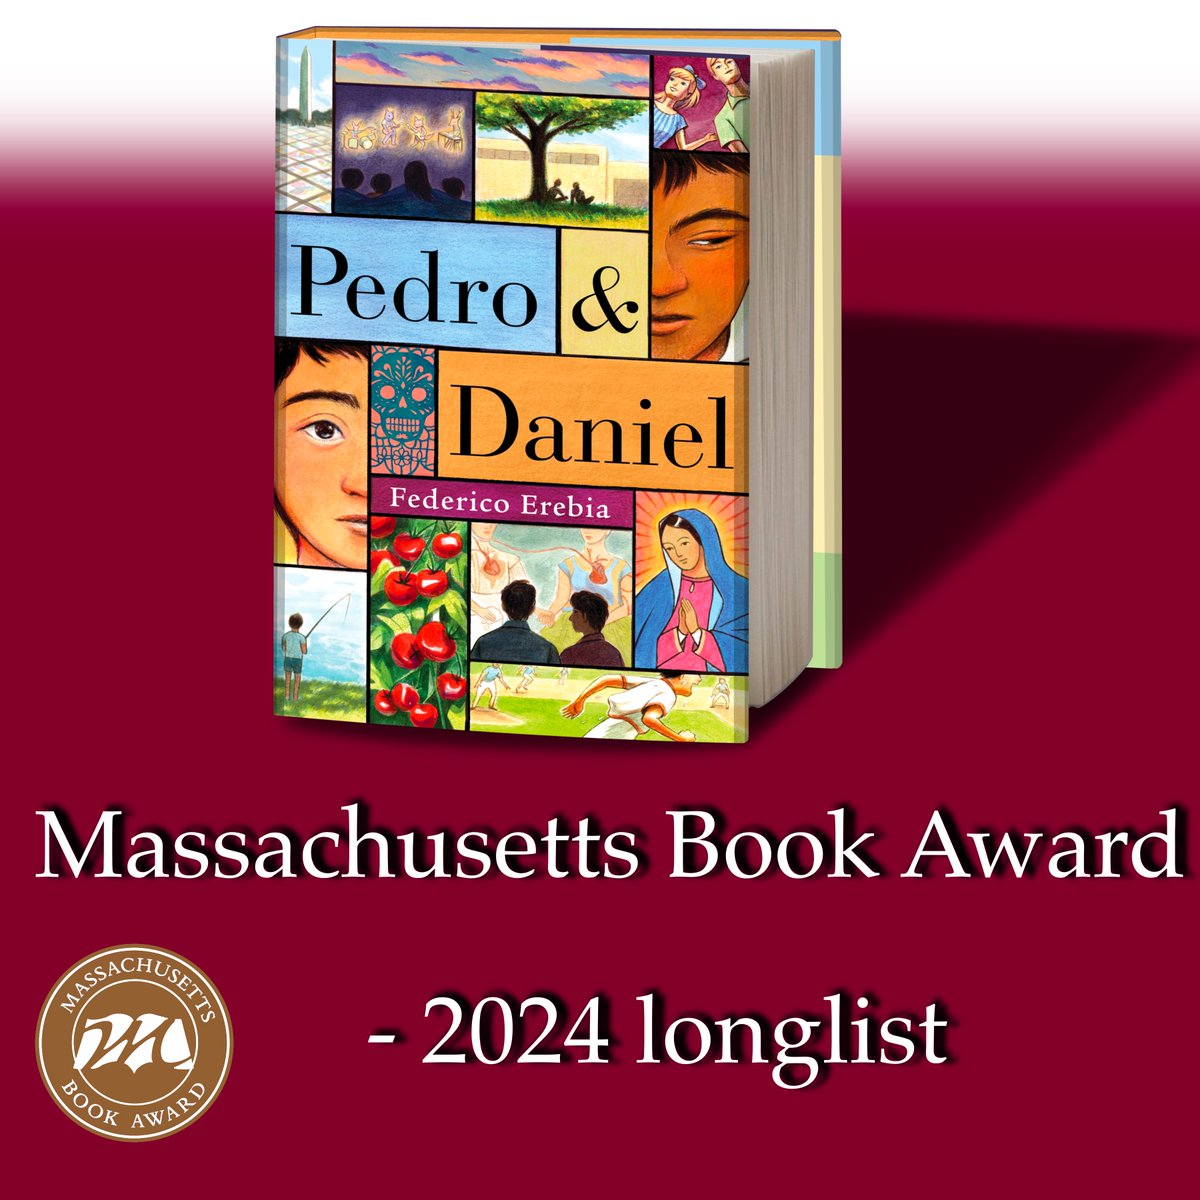 PEDRO & DANIEL is longlisted for the

2024 Massachusetts Book Award

#PedroAndDaniel #PedroWithoutDaniel #BookTwitter #LibraryTwitter #TeacherTwitter